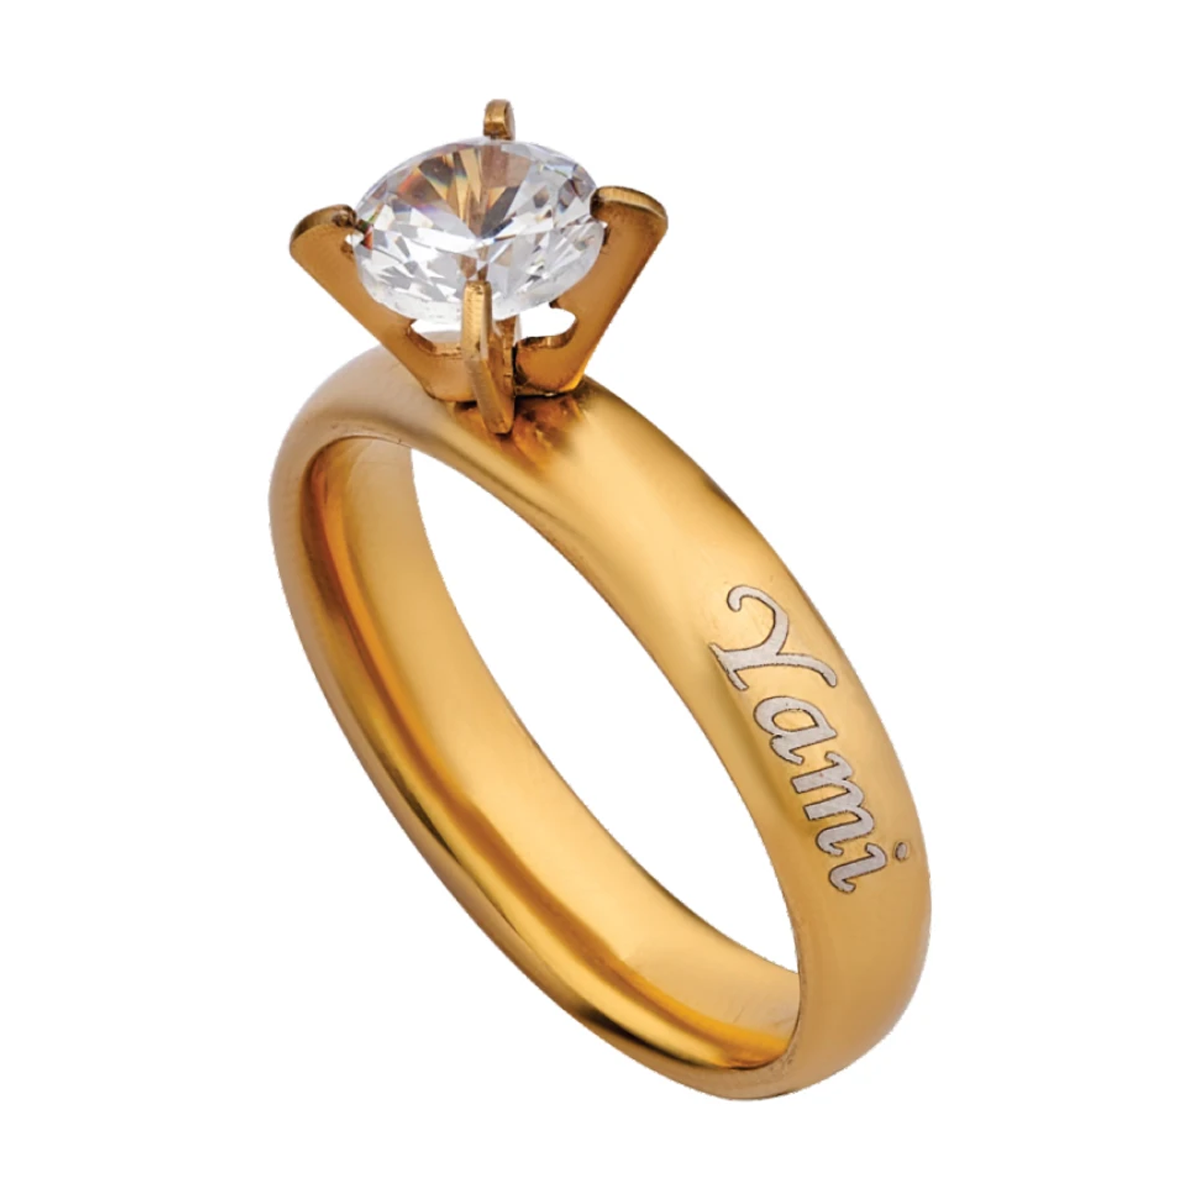 Personalized Men's Gold Tungsten Wedding Band Promise Ring, 8mm Greek Key  Ring | eBay